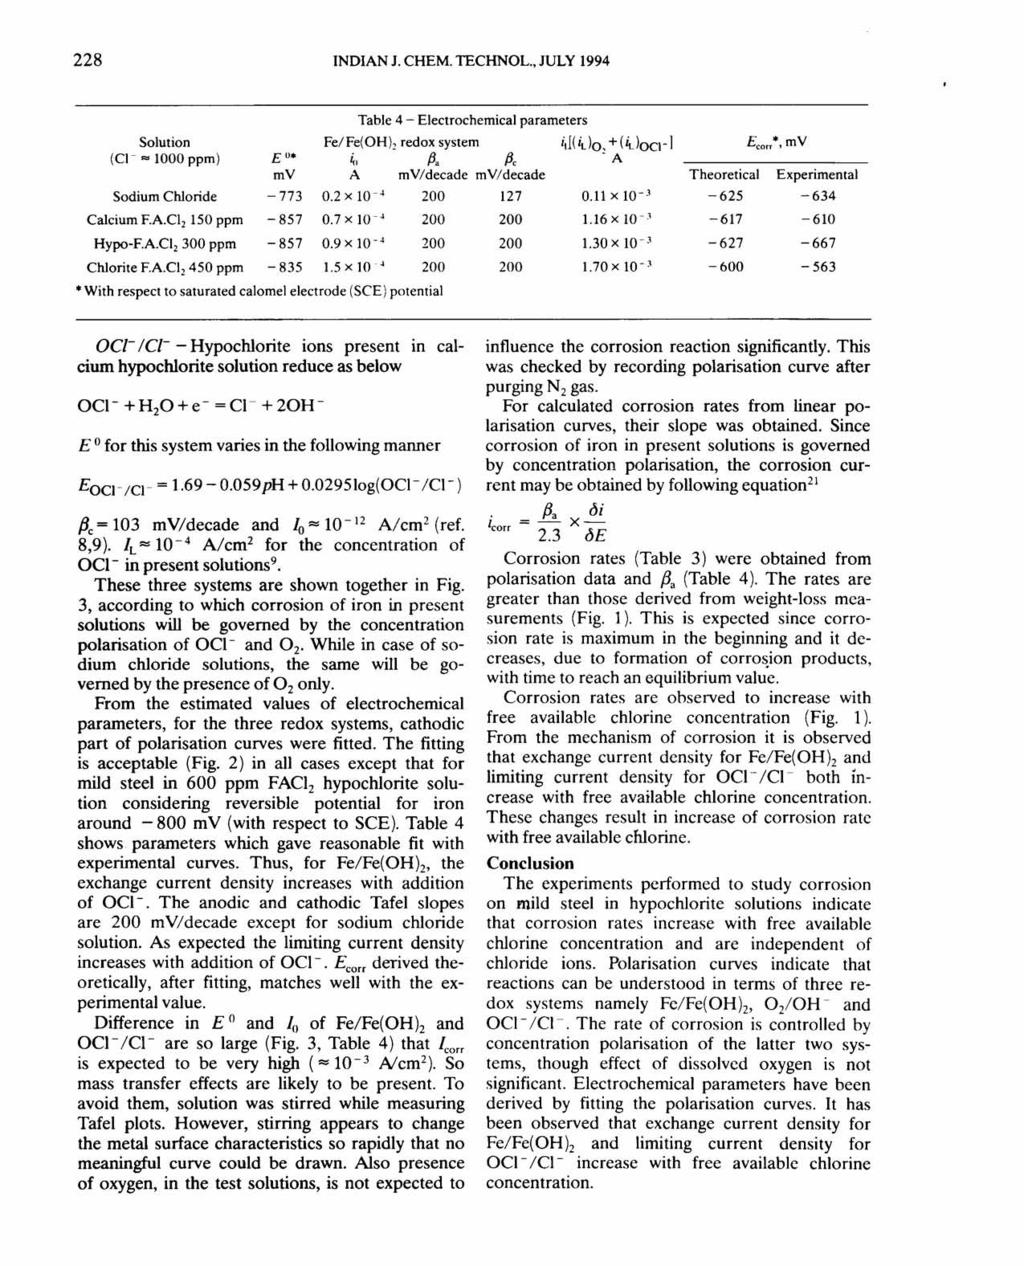 228 INDIAN J. CHEM. TECHNOL., JULY 1994 Solution (Cl- 1000 ppm) Table 4 - Electrochemical parameters Fe/Fe(OH)2 redox system id(i.jo, + (i,joc1-l E o.